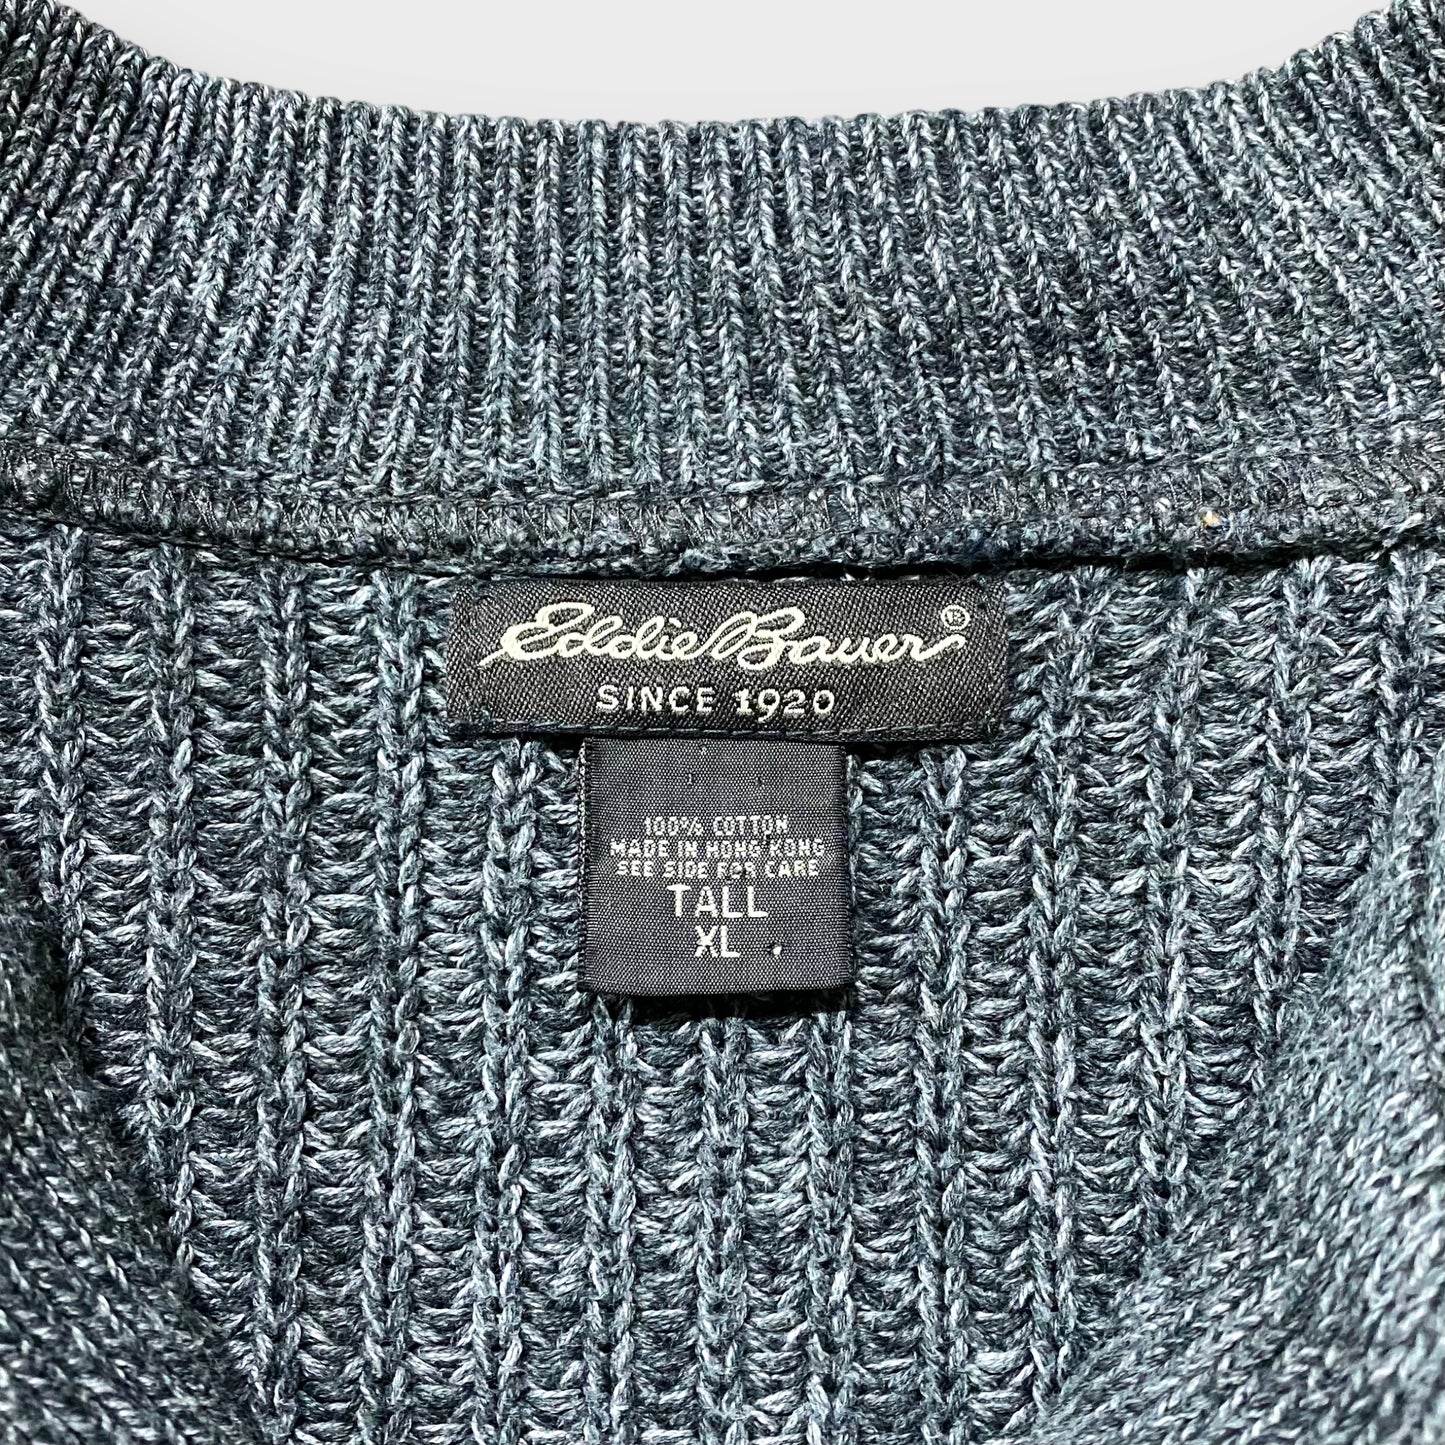 "Eddie Bauer" Henry neck ridge knitting sweater